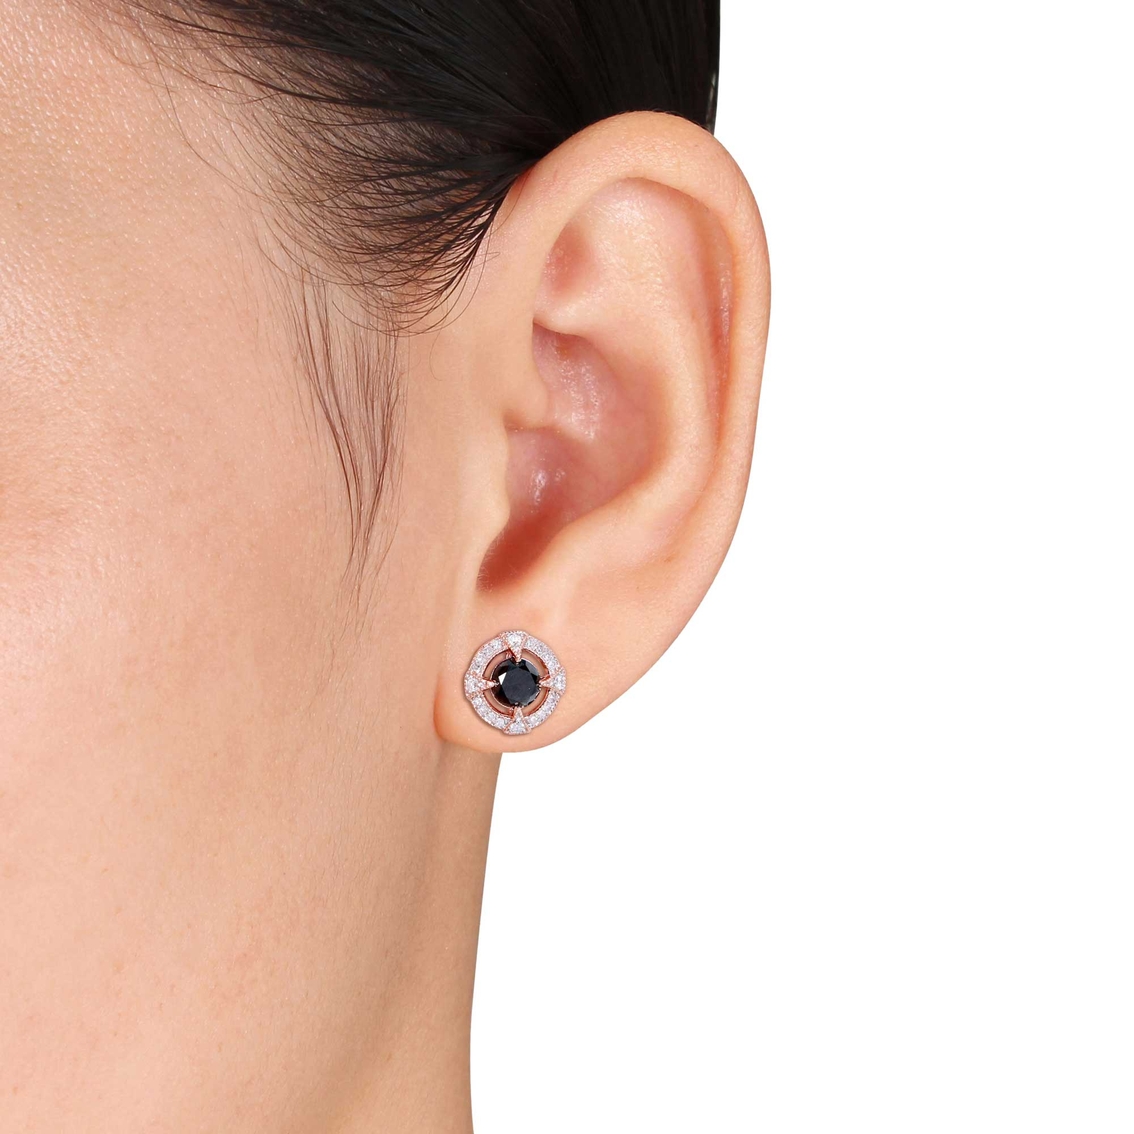 Sofia B. 10K Rose Gold 2 1/5 CTW Black and White Diamond Halo Stud Earrings - Image 2 of 2